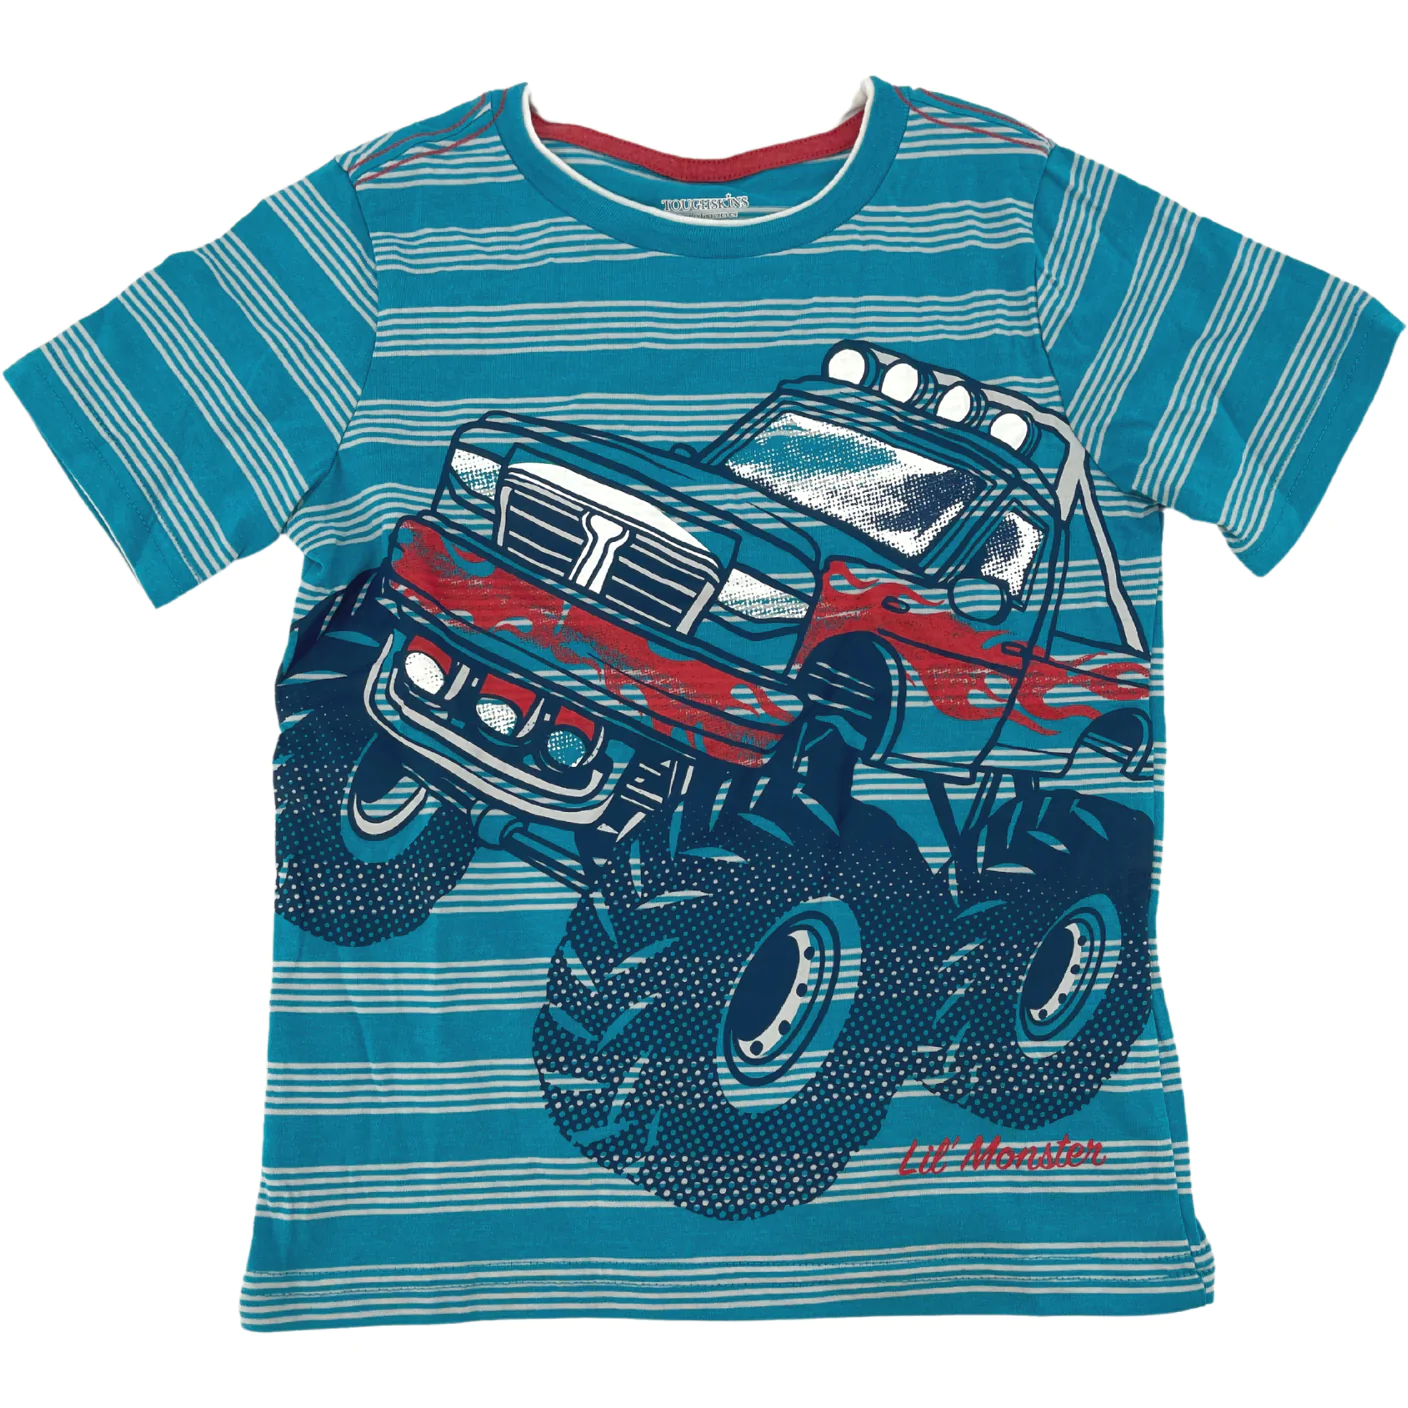 Toughskins Boy's T-Shirt / Monster Truck / Blue & White / Size Medium